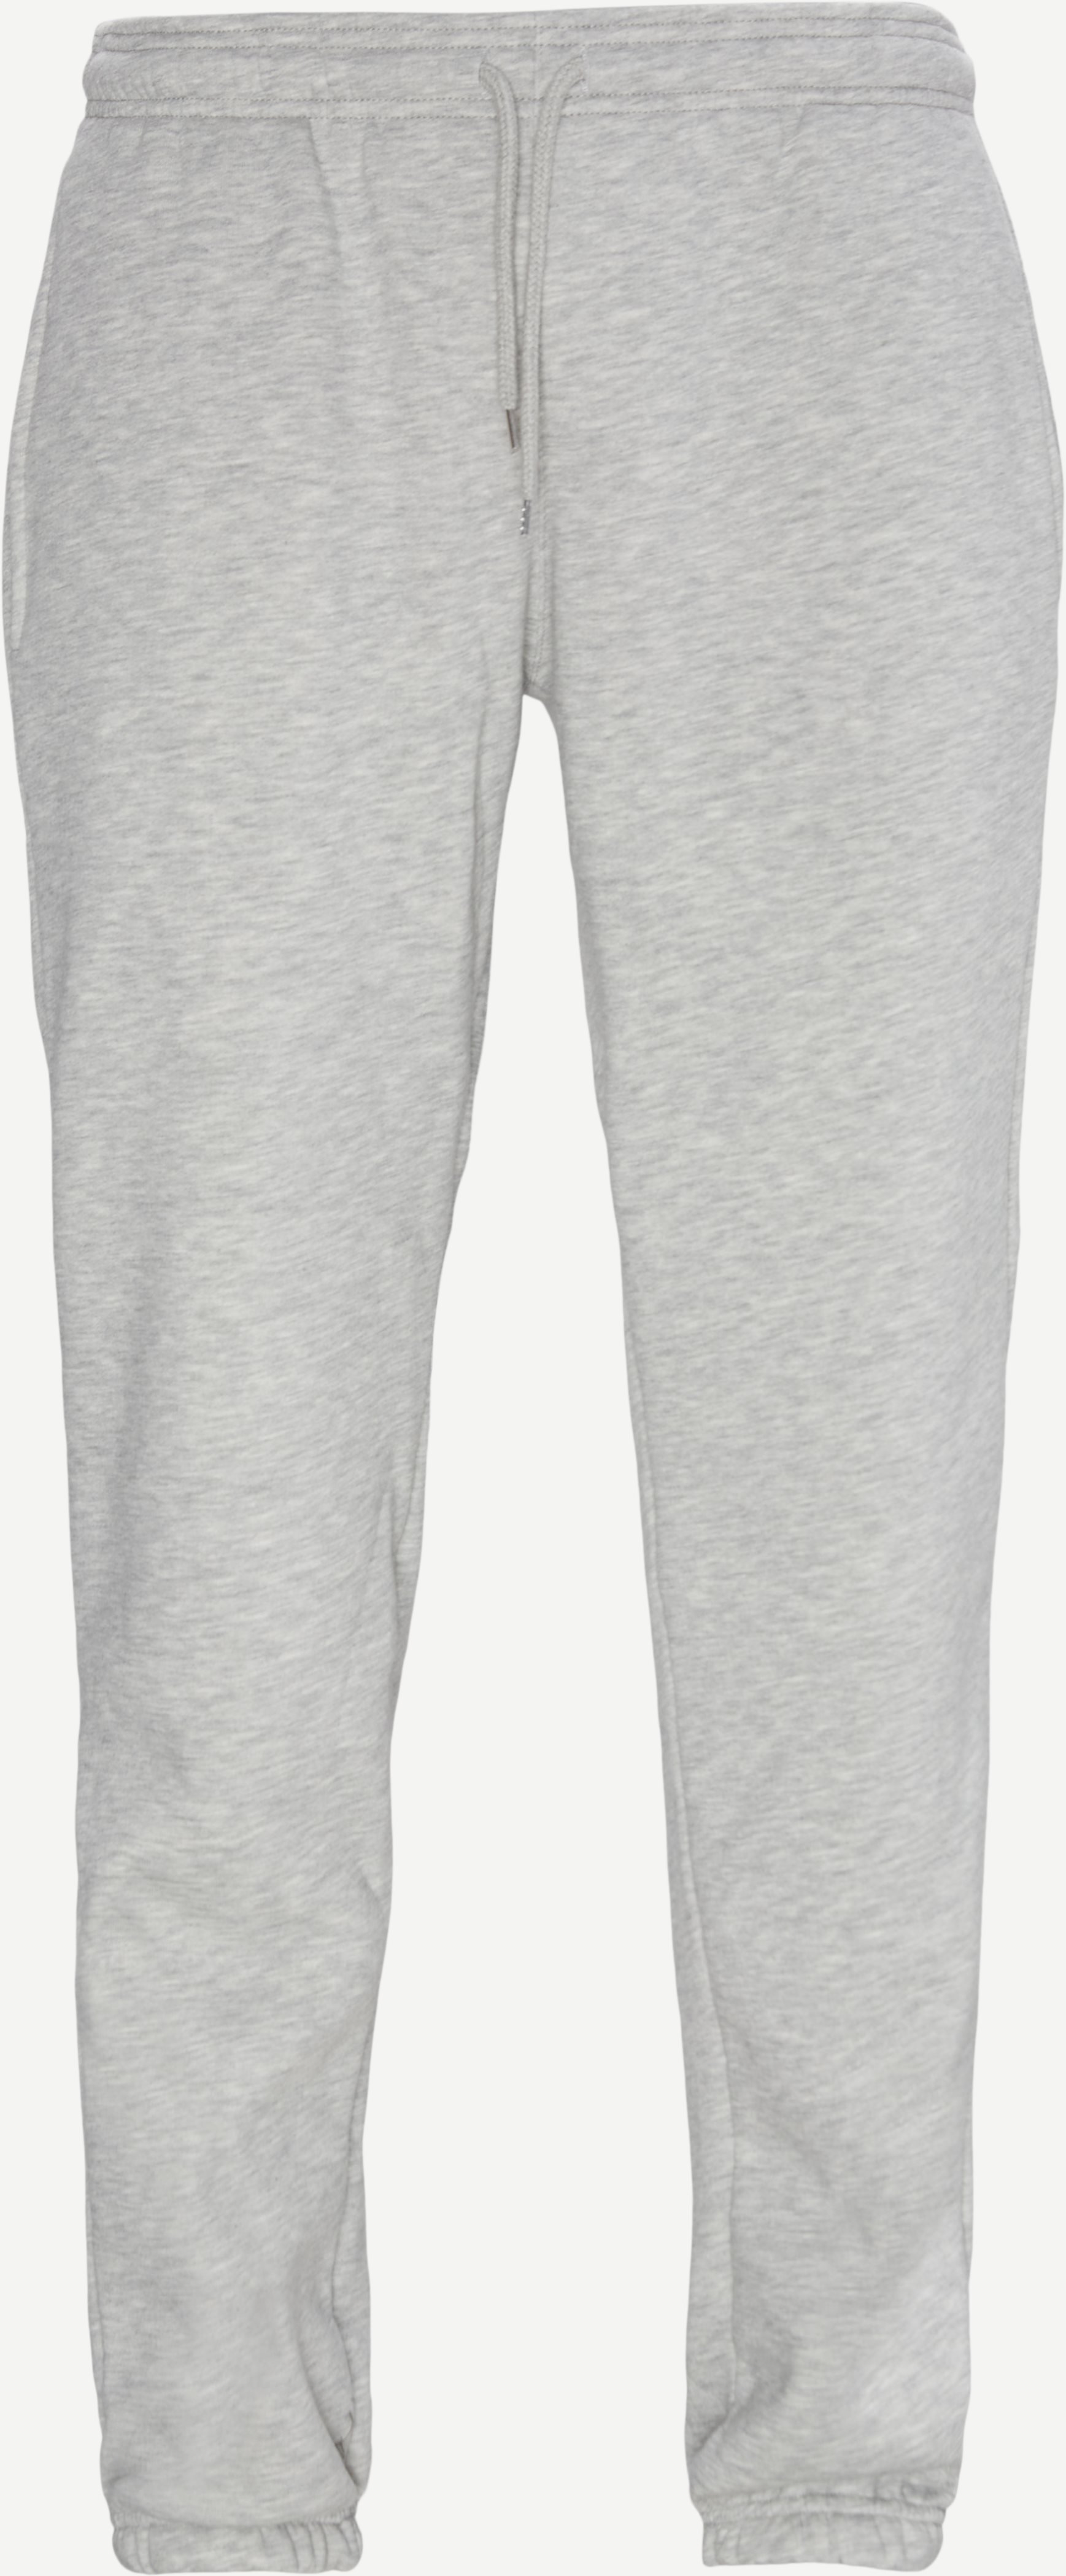 Iceland Trousers GRANADA Grey